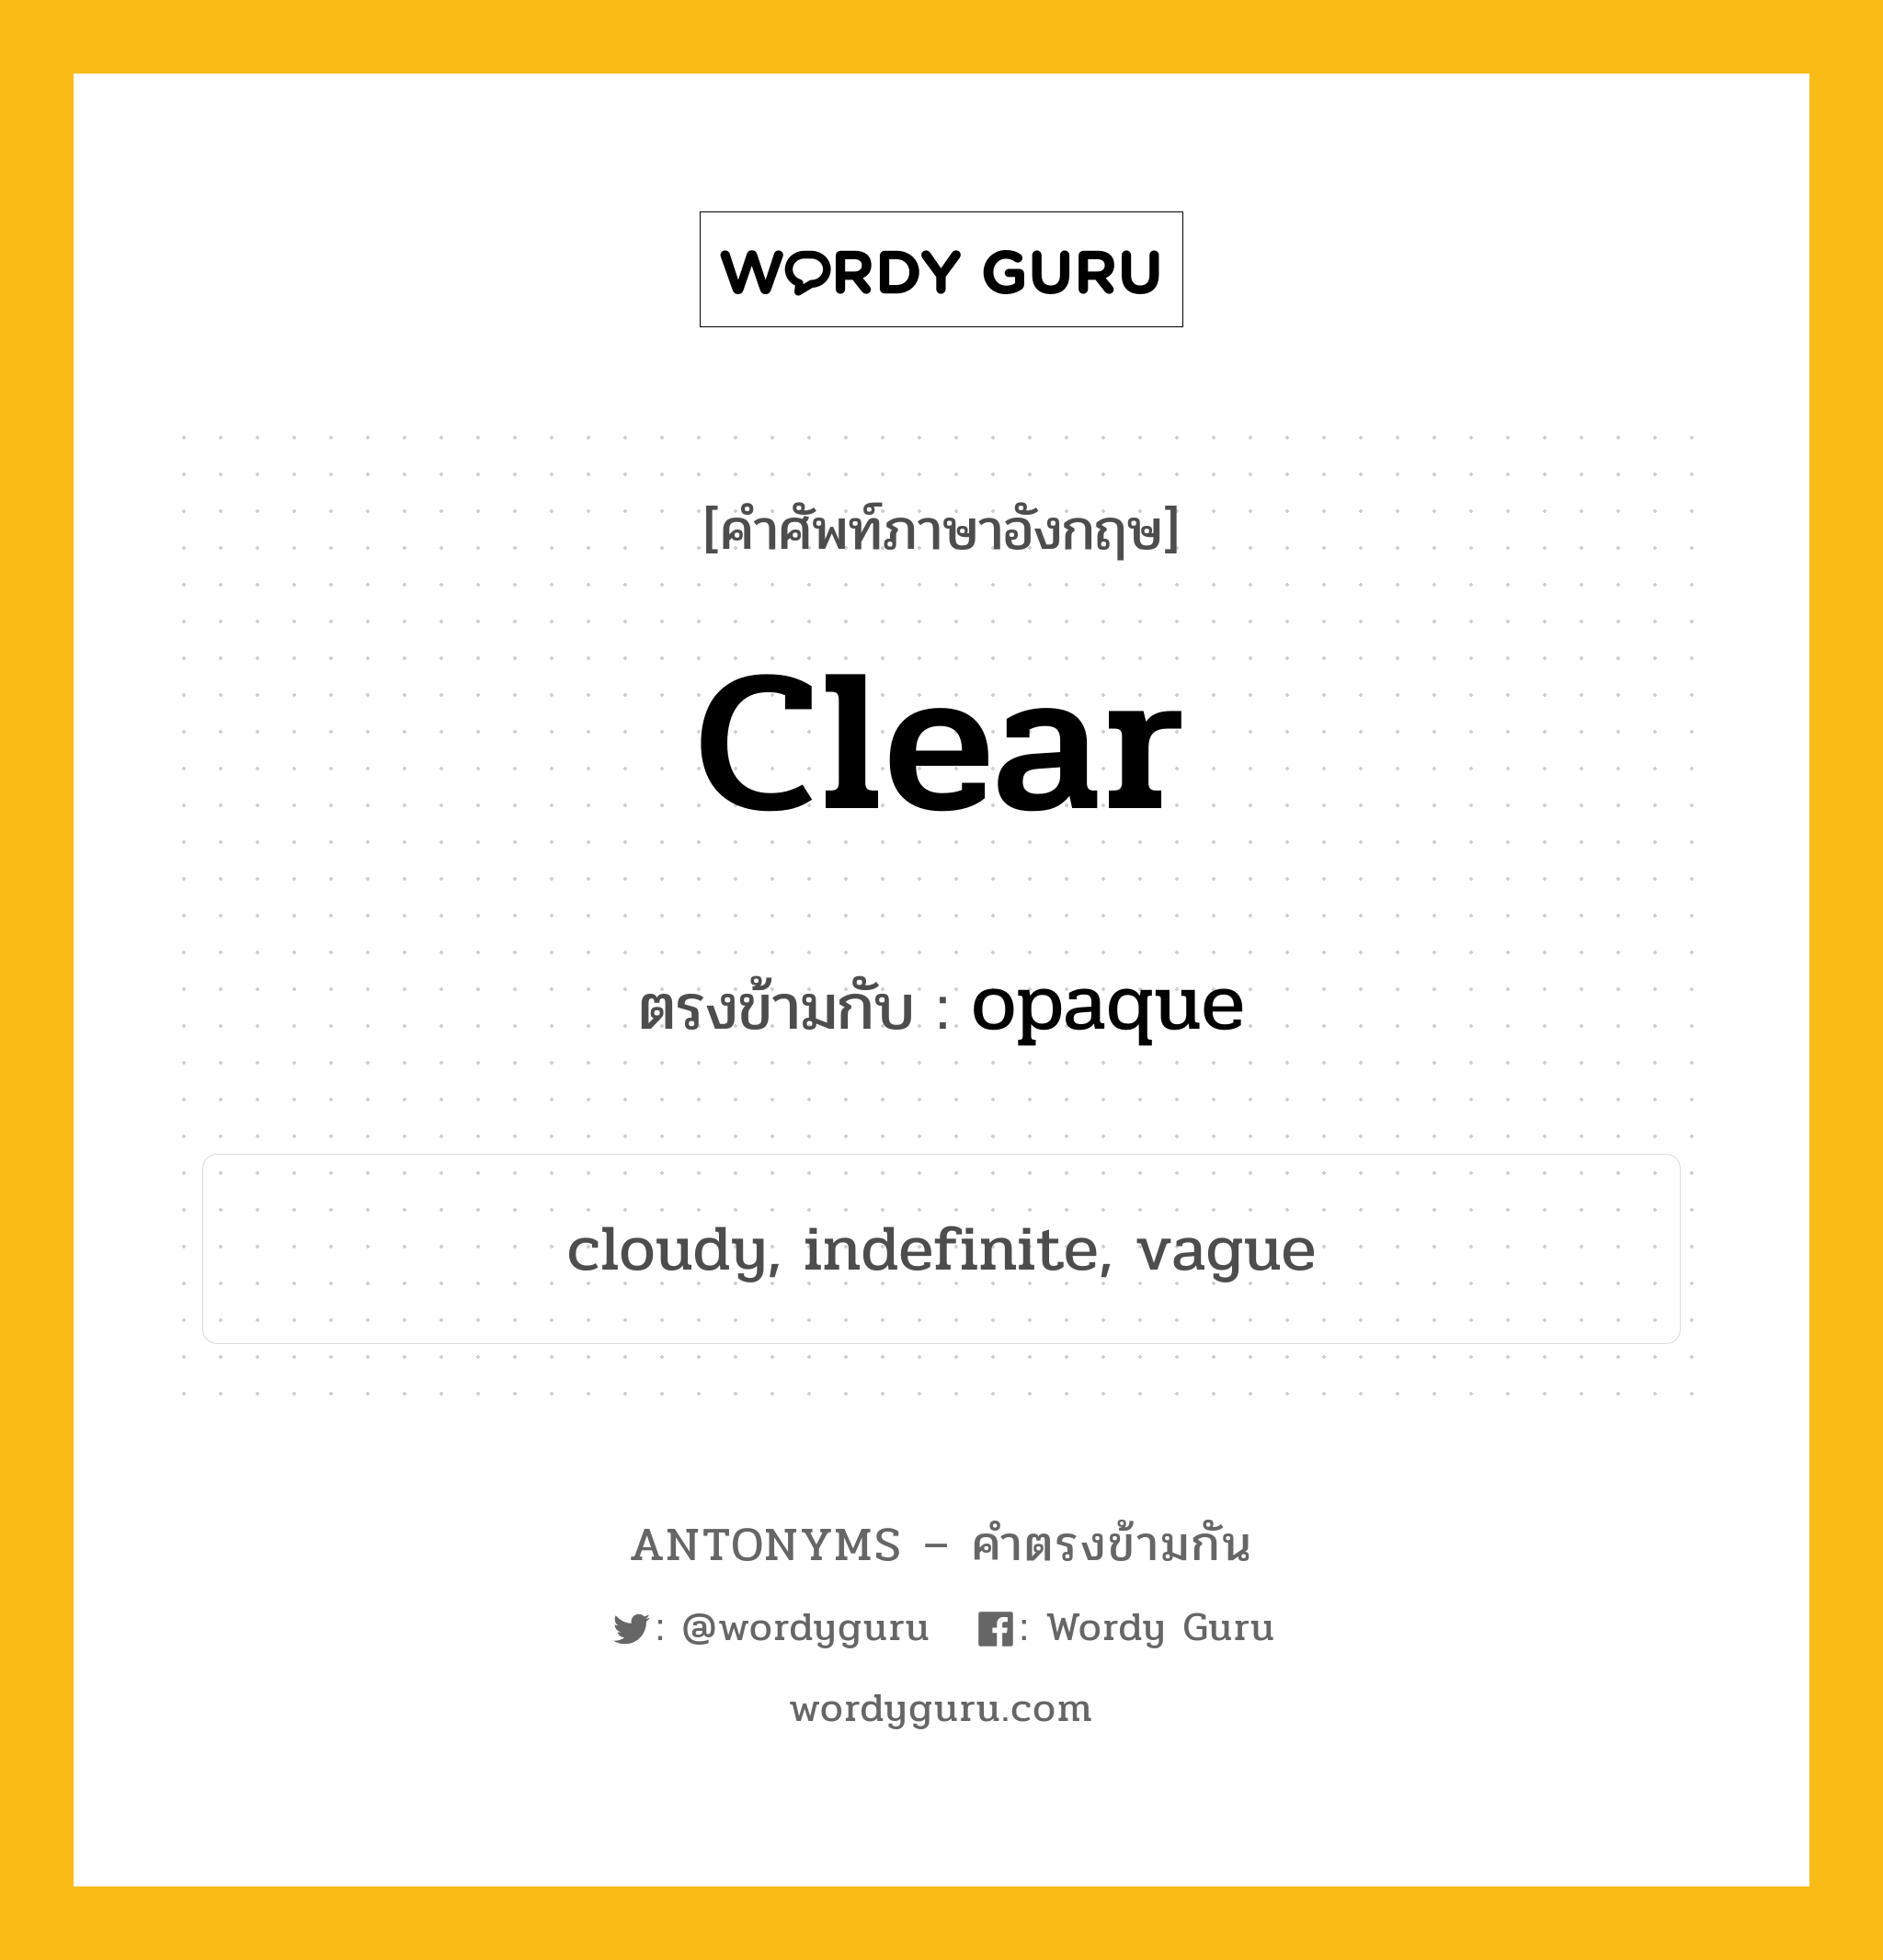 clear เป็นคำตรงข้ามกับคำไหนบ้าง?, คำศัพท์ภาษาอังกฤษ clear ตรงข้ามกับ opaque หมวด opaque